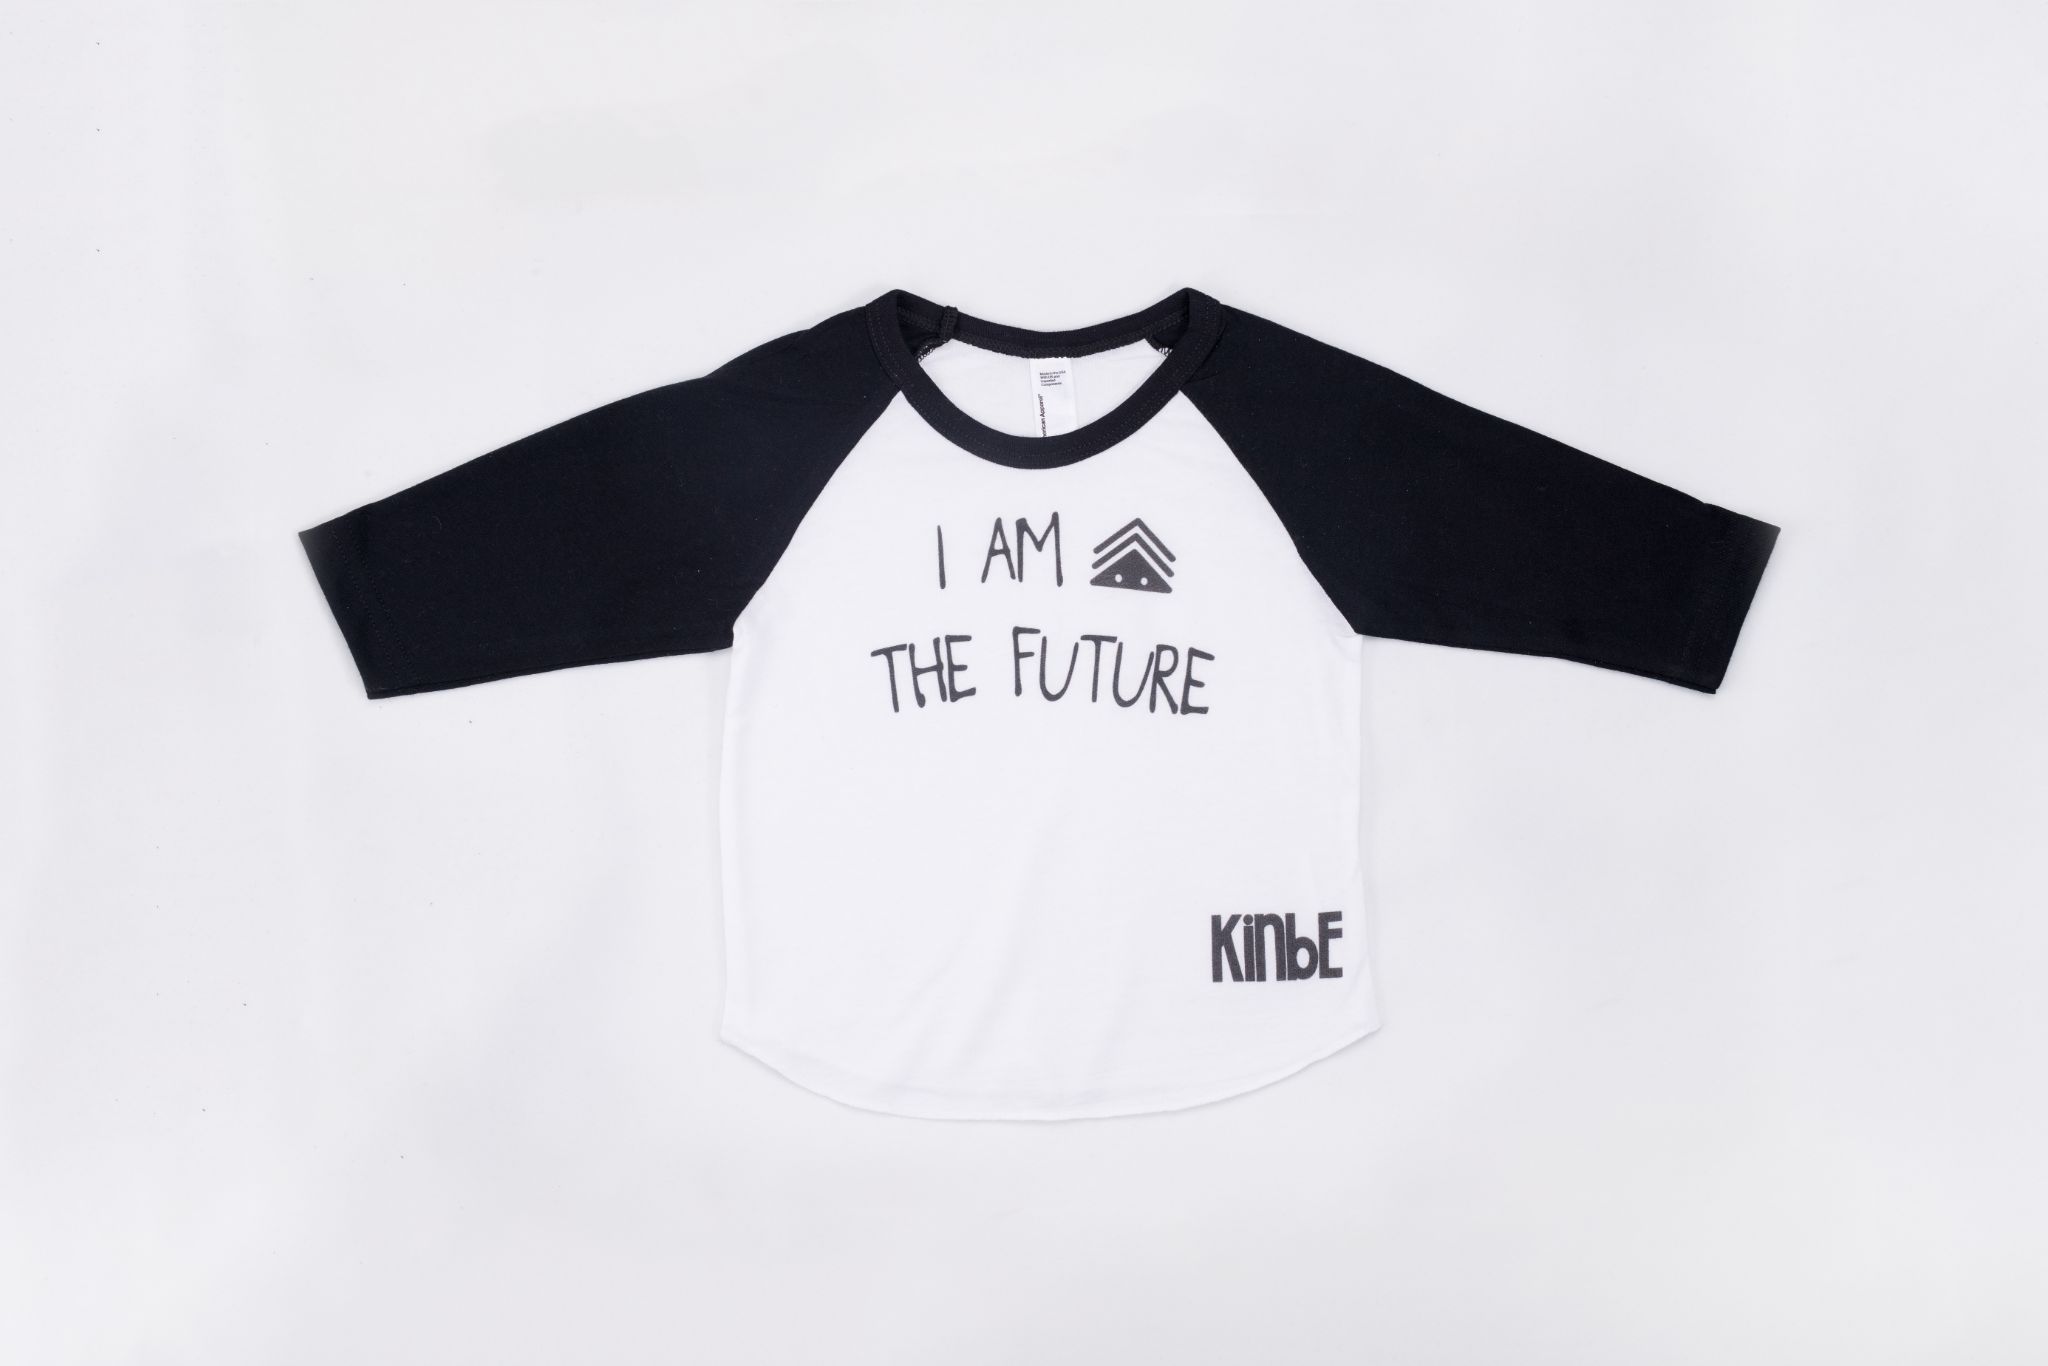 Kinbe Kids Product Black and white I Am The Future shirt on display with Kinbe logo